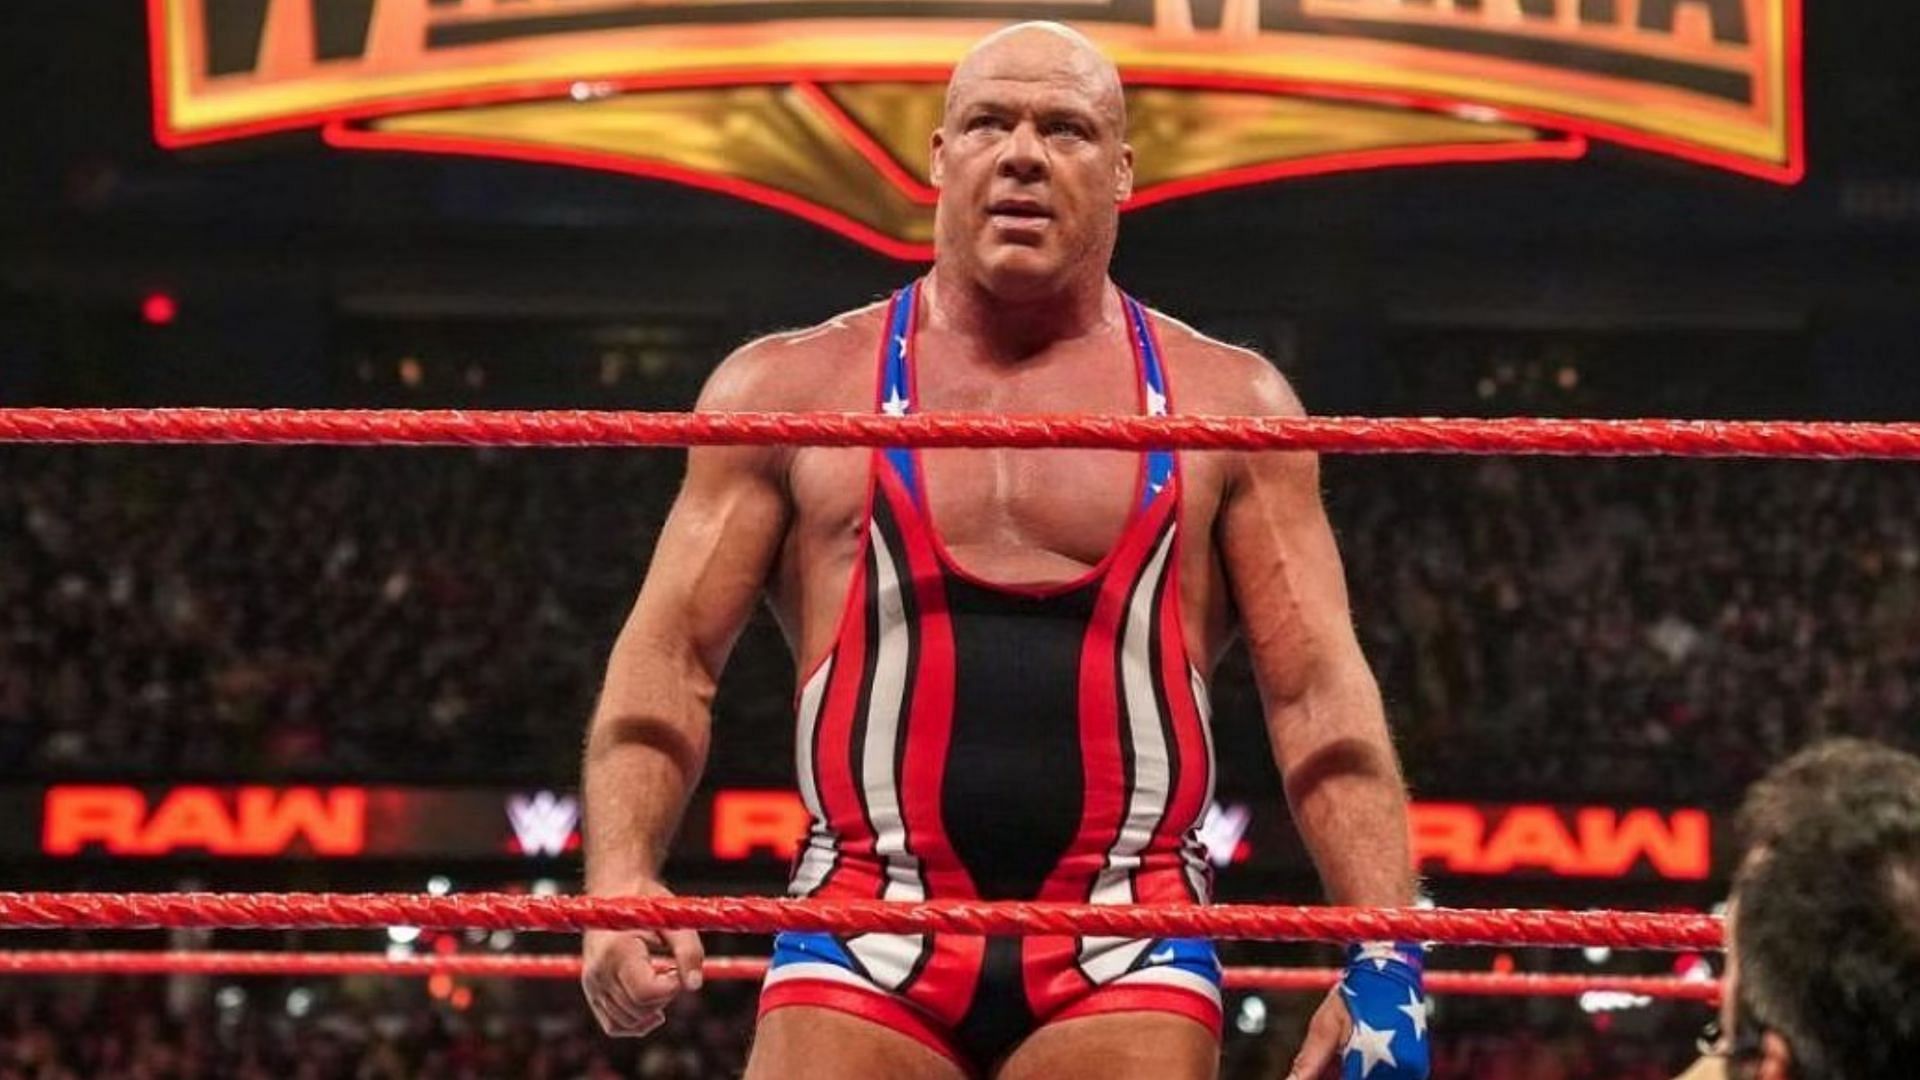 WWE Hall of Famer Kurt Angle retired in 2019